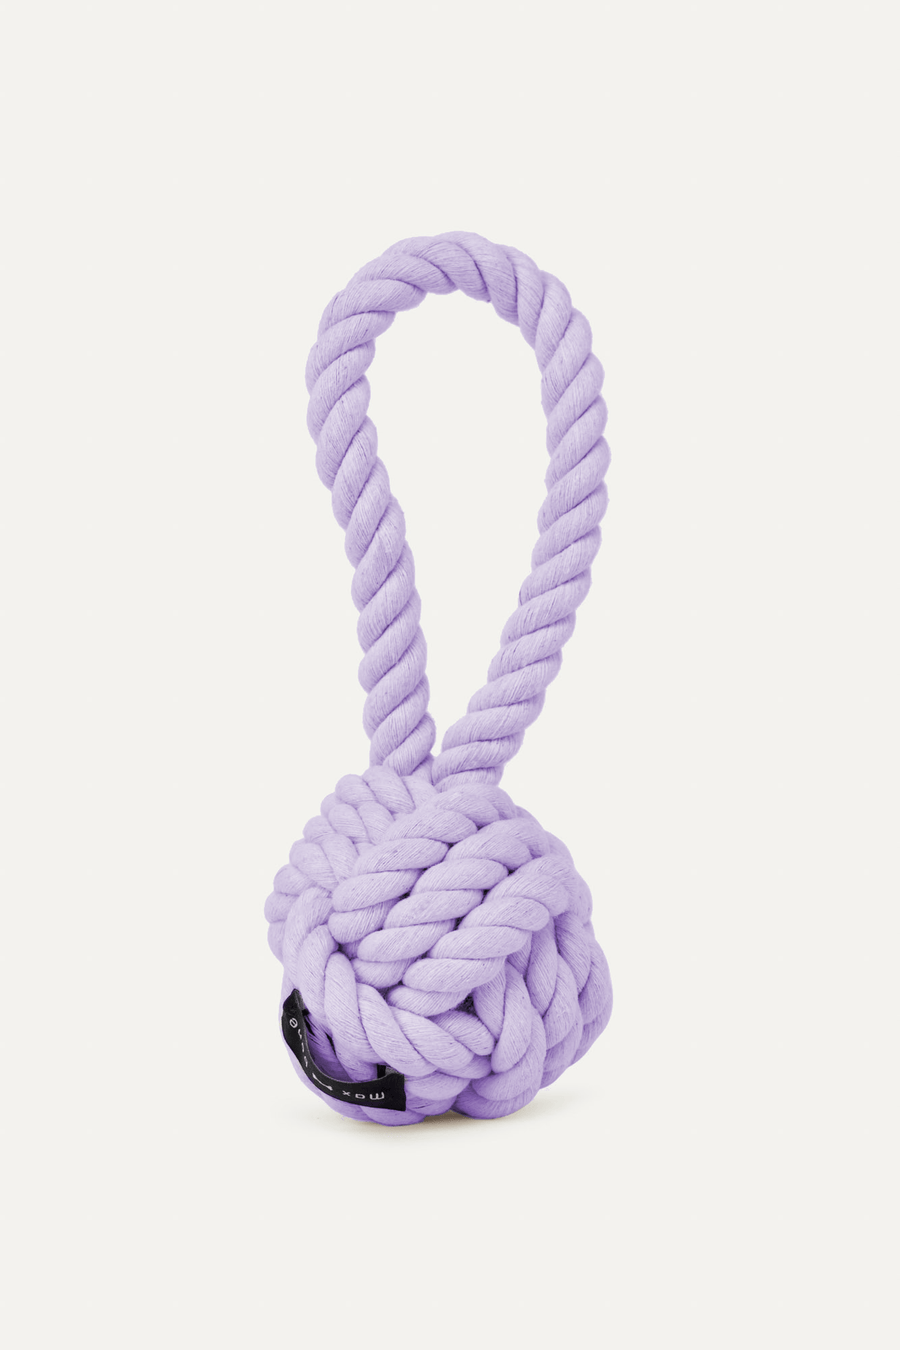 Maxbone Lavender Large Twisted Rope Toy